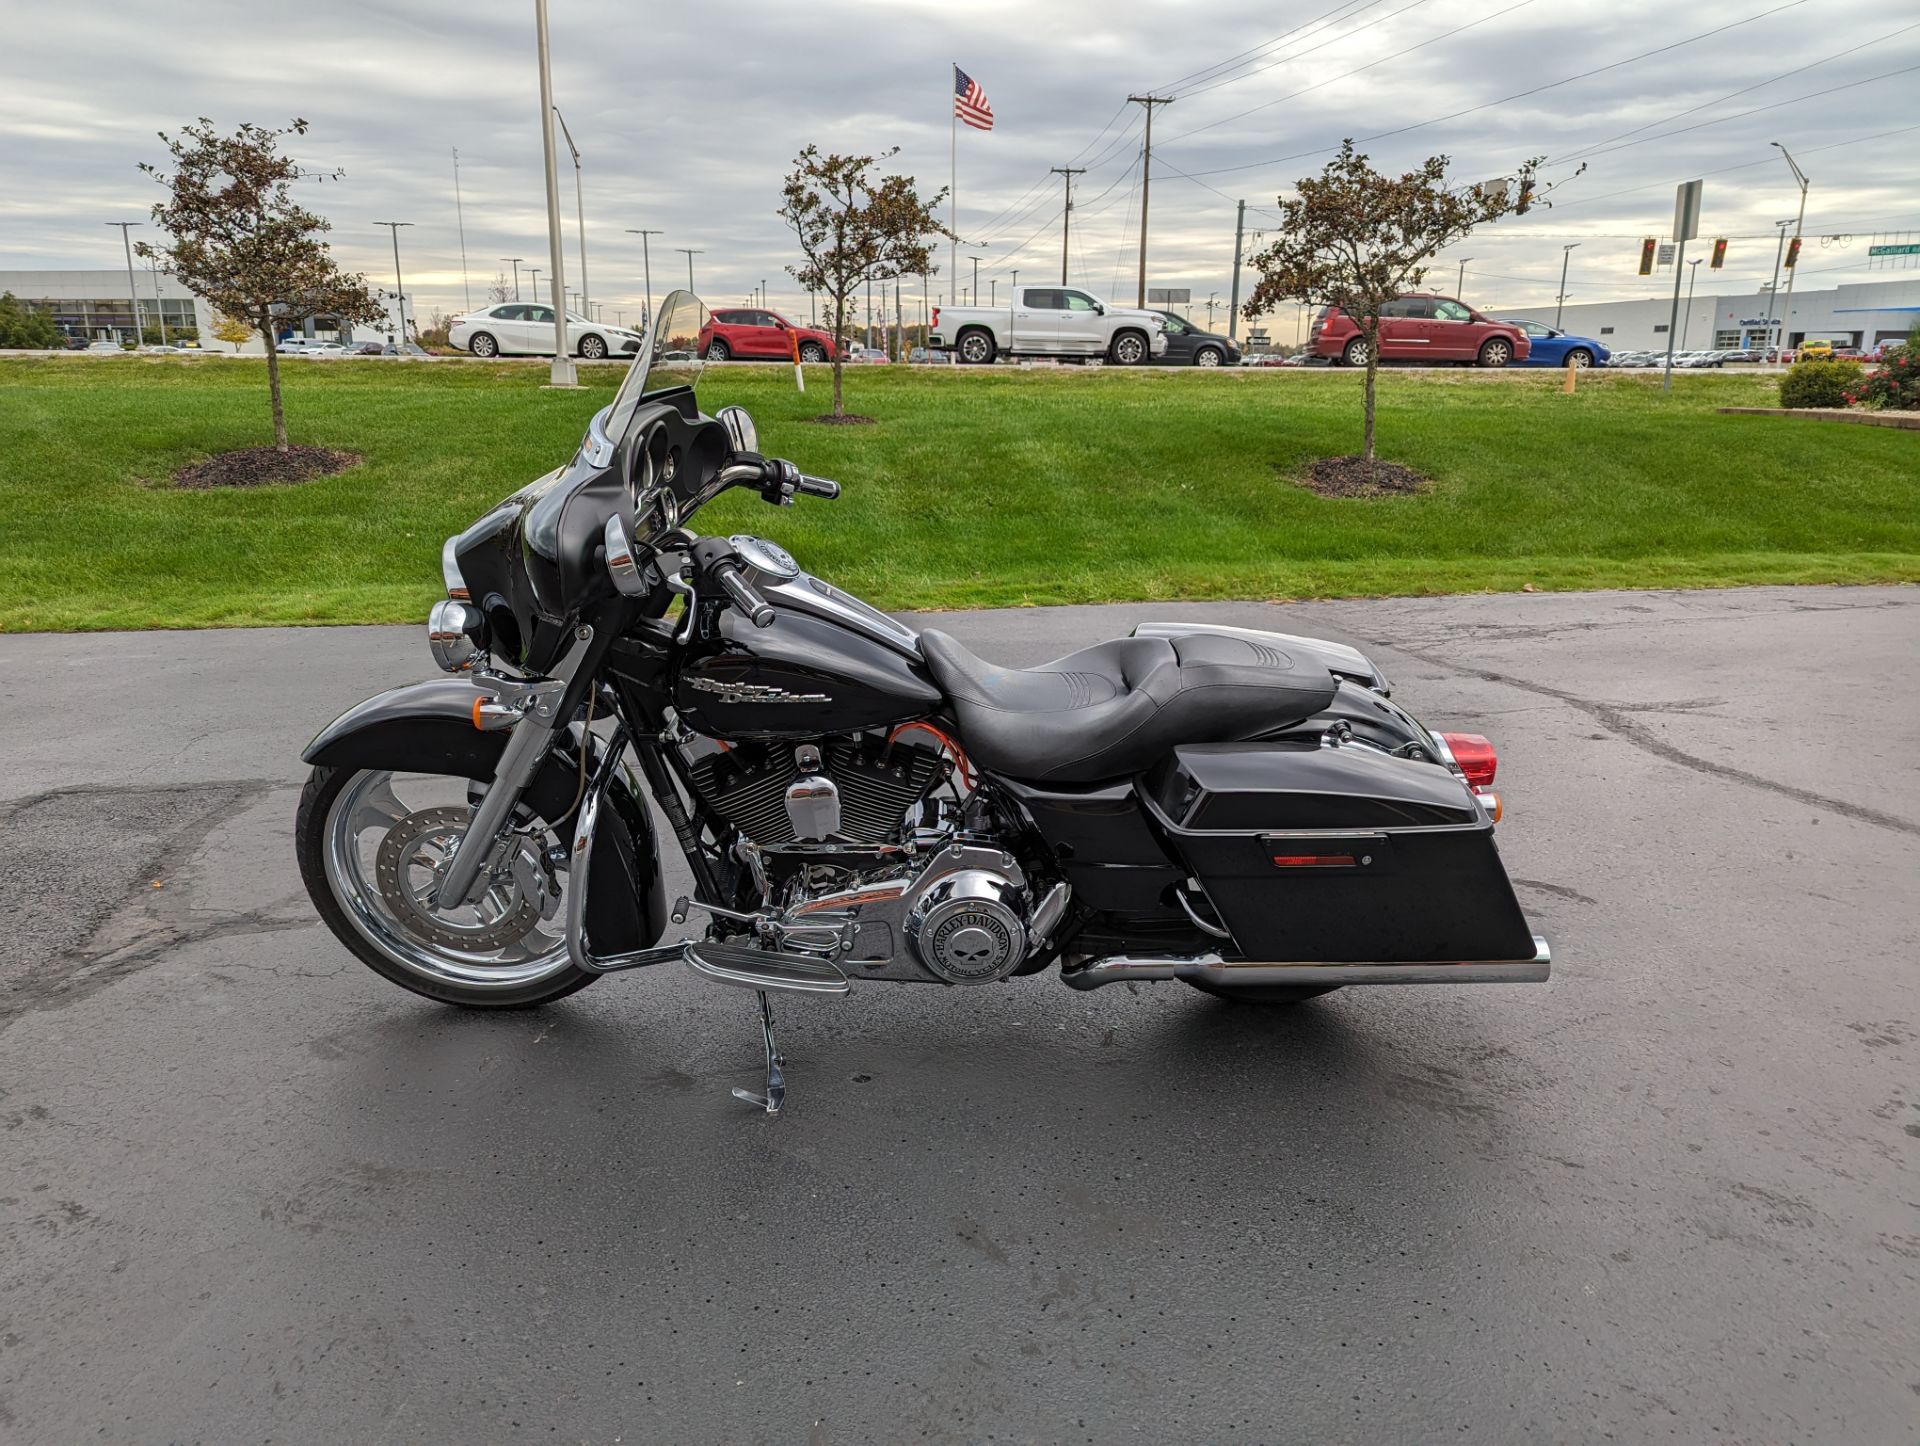 2009 Harley-Davidson Street Glide® in Muncie, Indiana - Photo 3